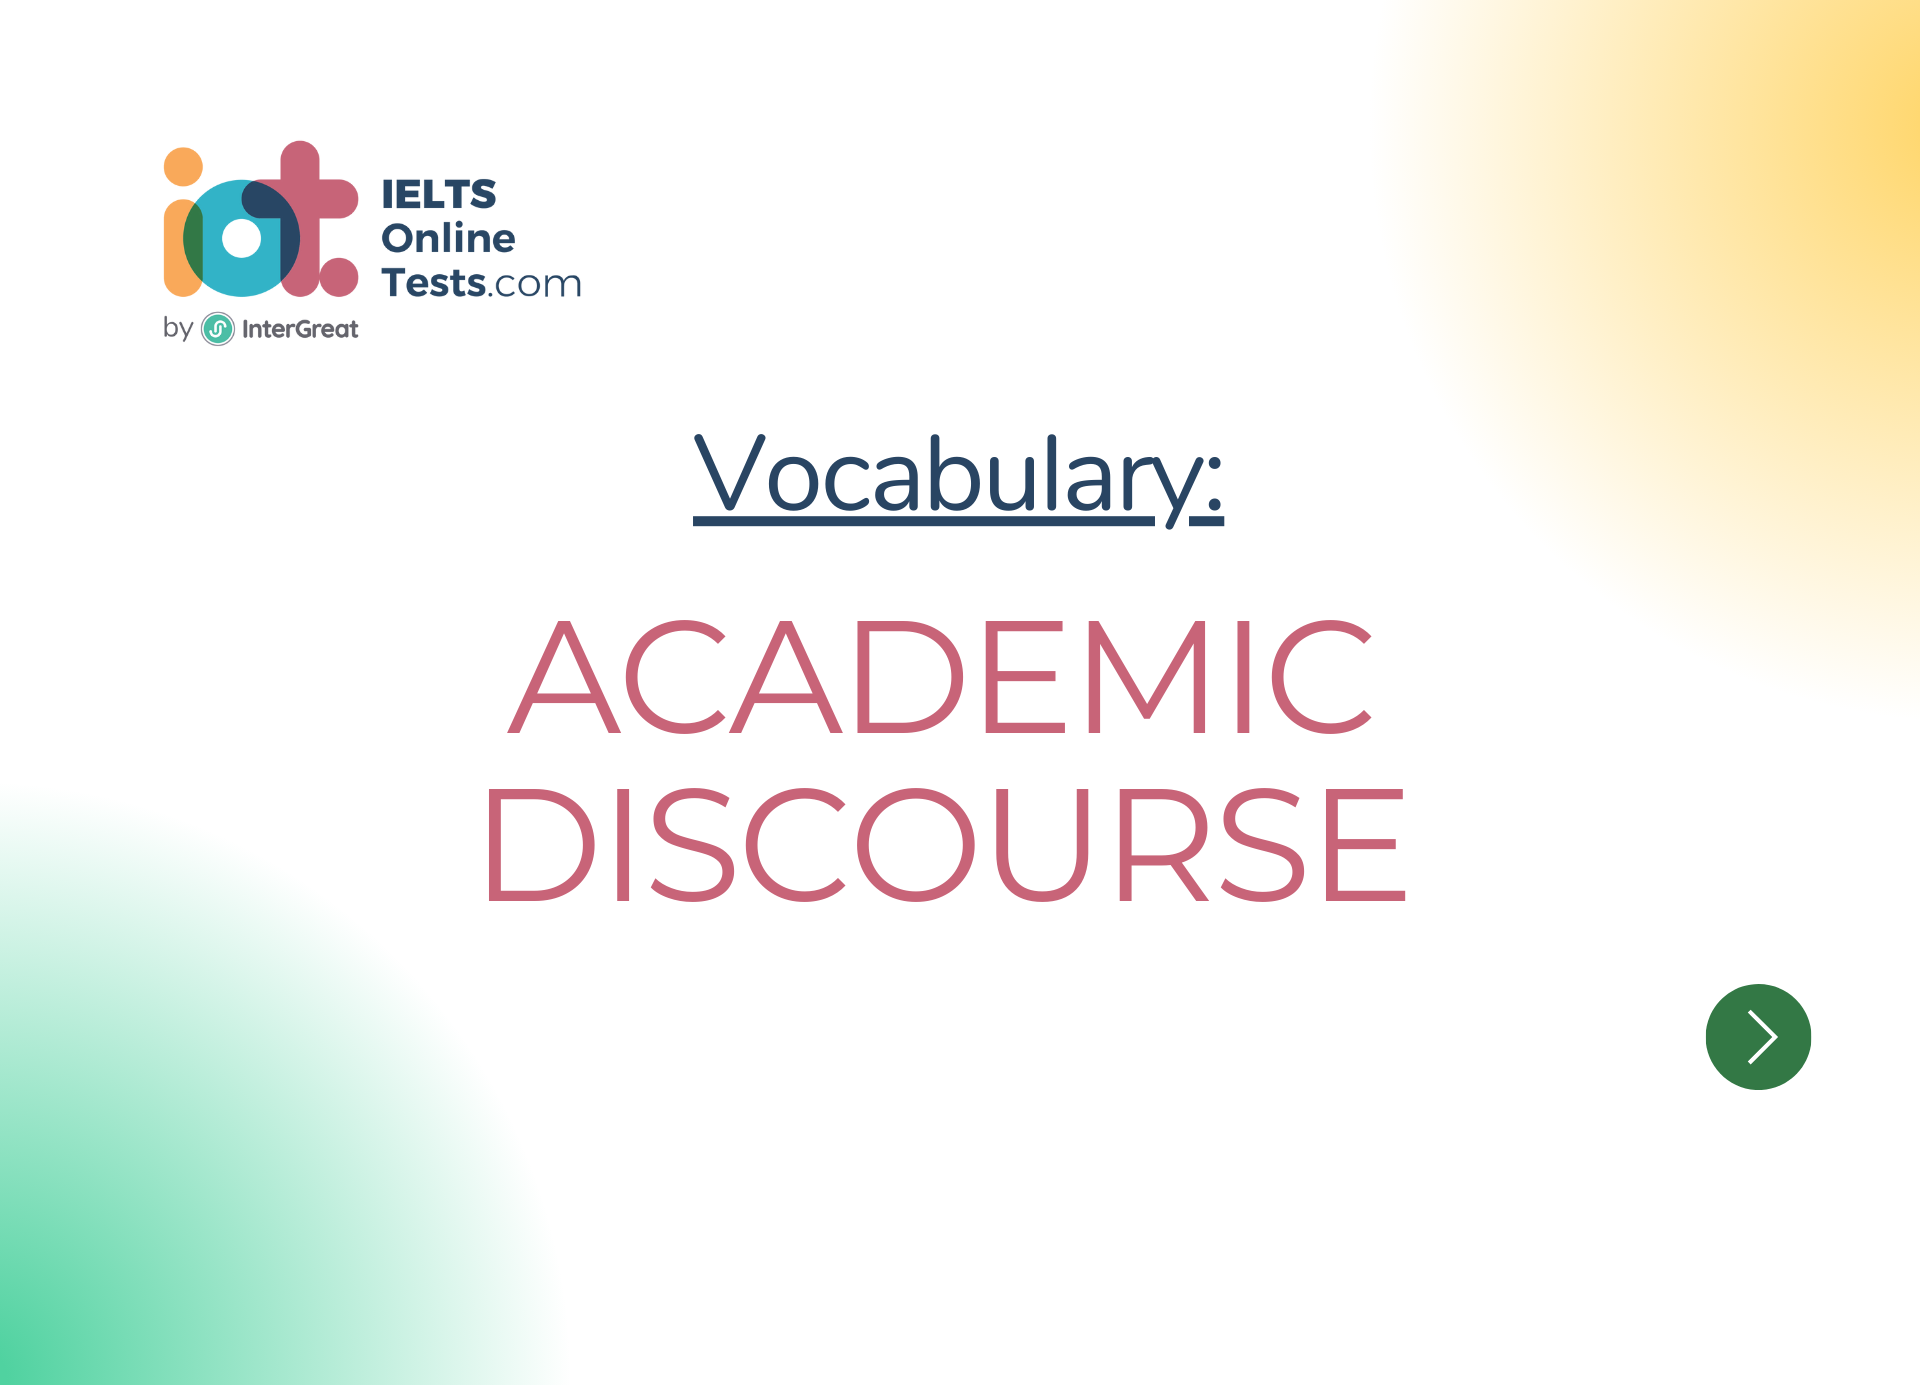 Academic discourse